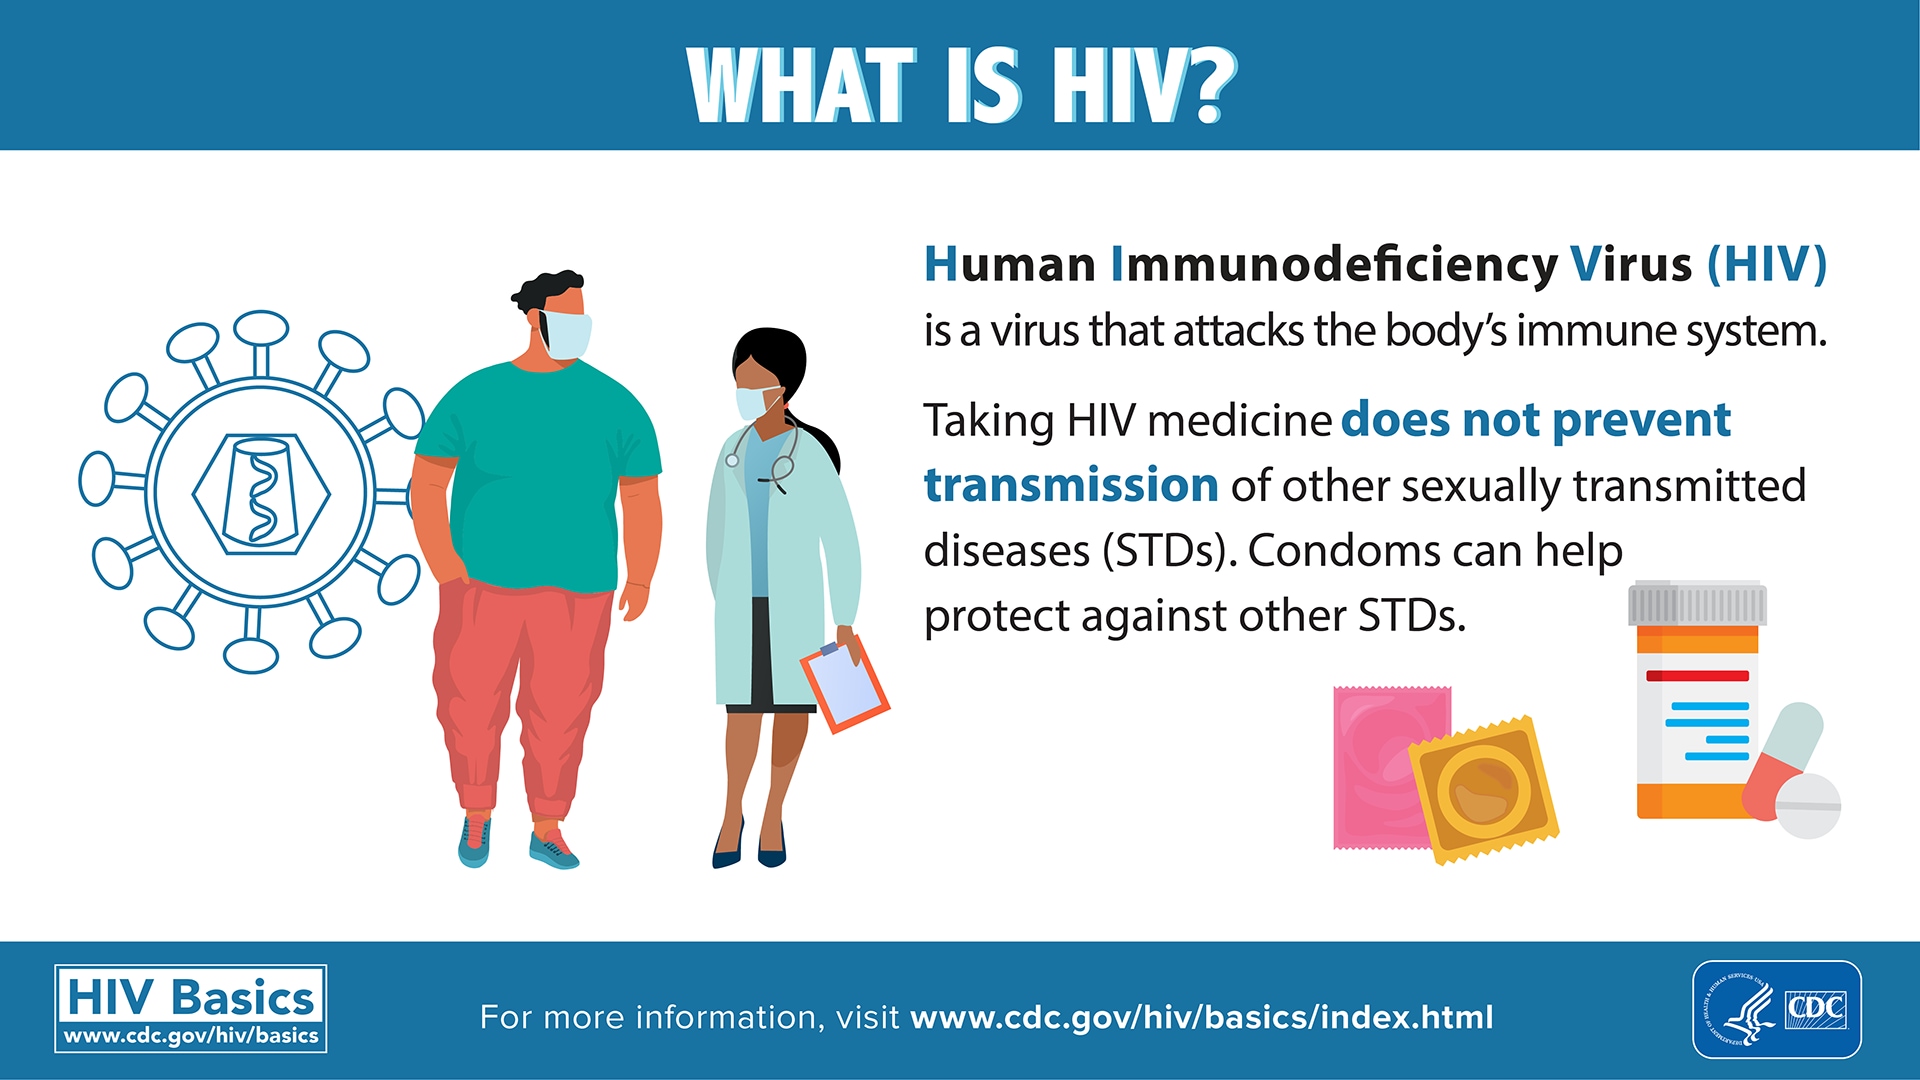 hiv aids prevention methods